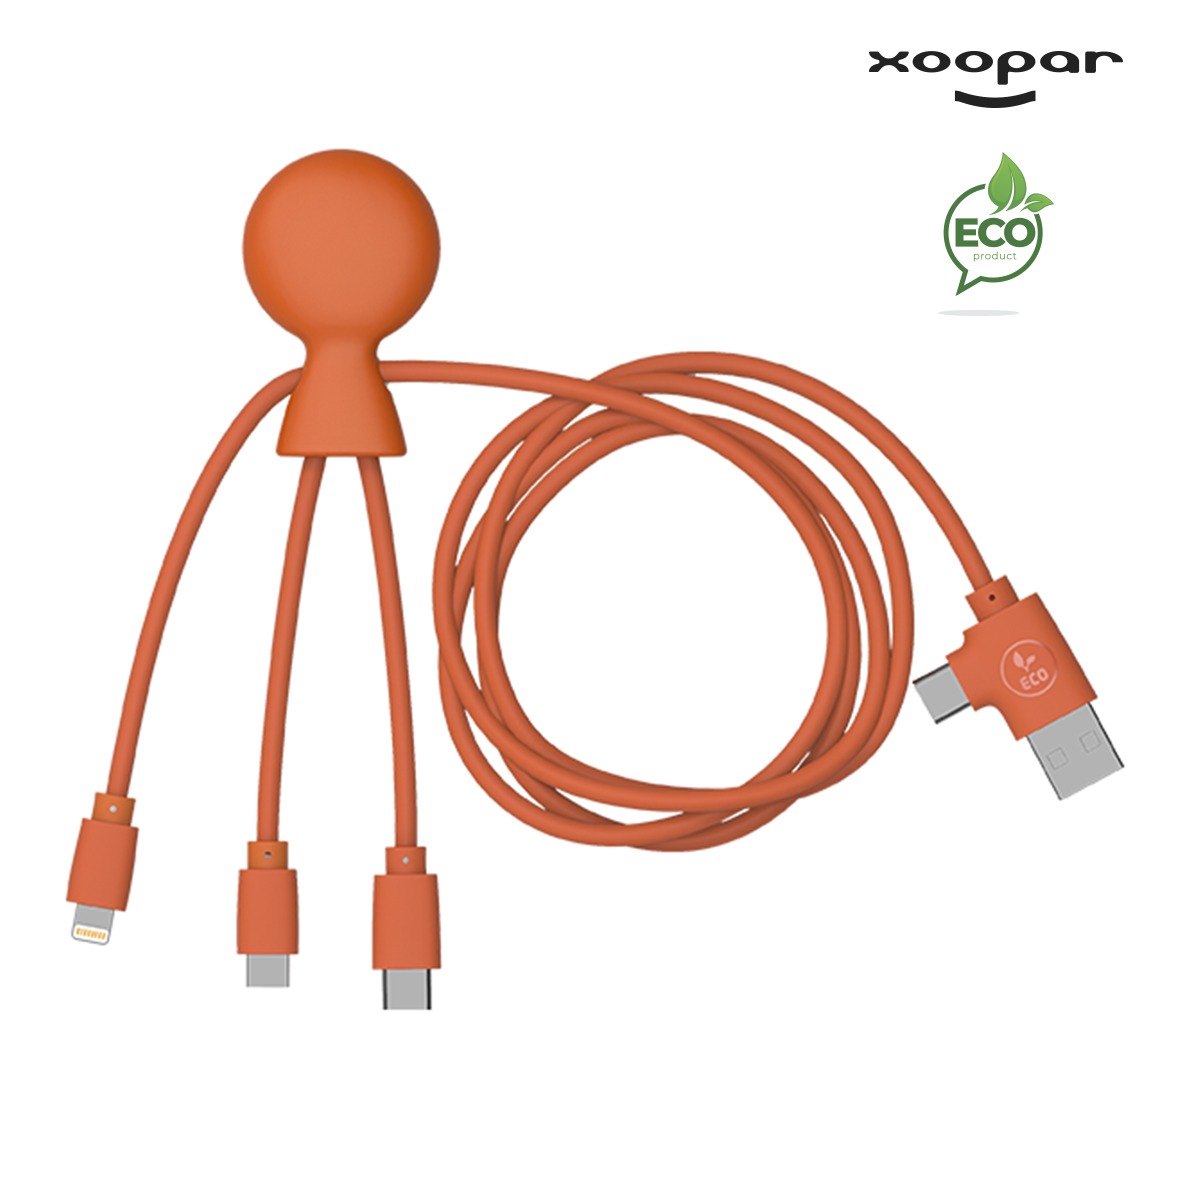 Cable multi connectiques – Mr bio Long recycle Xoopar personnalise-4